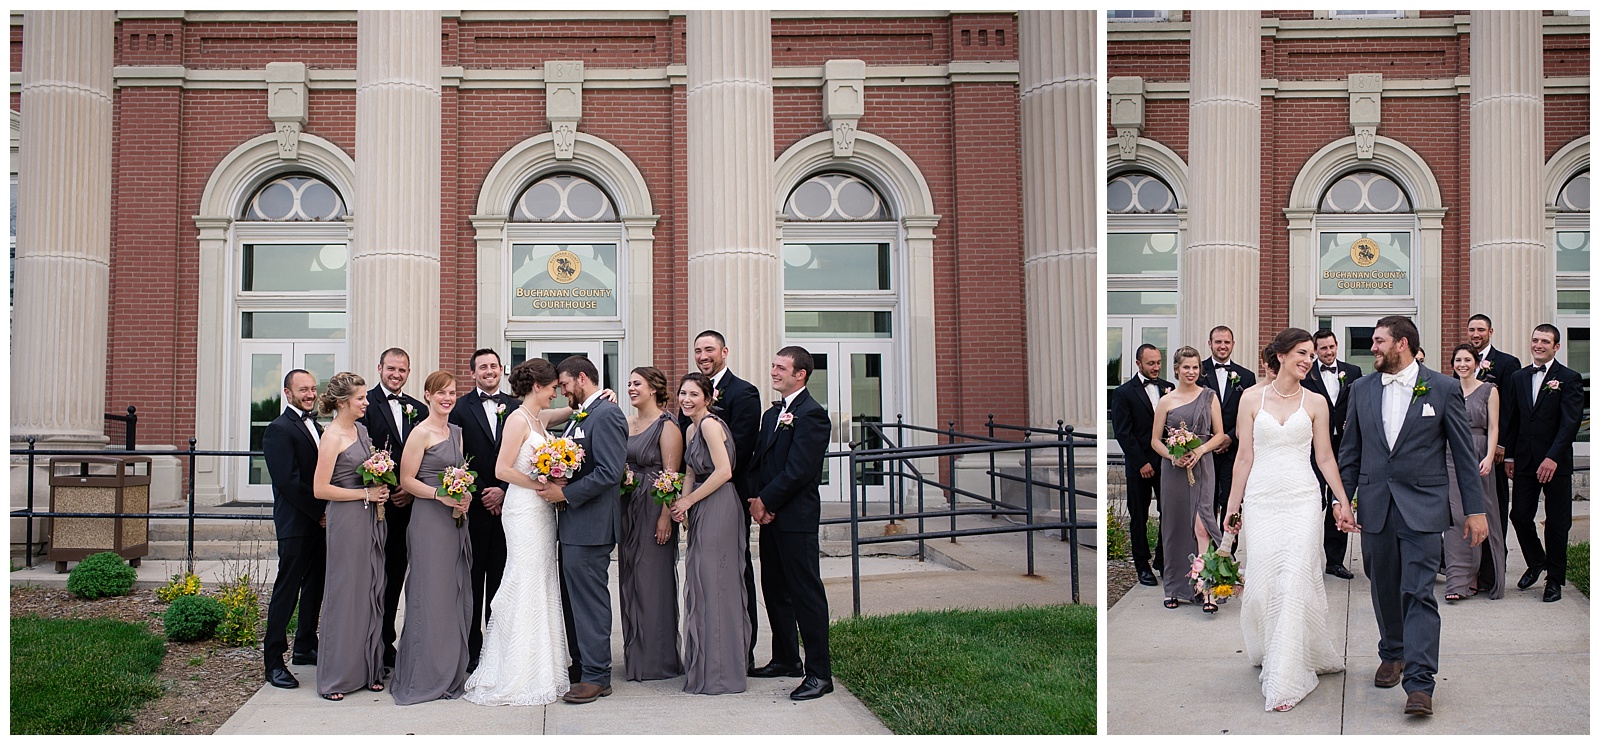 Wedding photography in St. Joseph, Missouri, by Kansas City wedding photographers Wisdom-Watson Weddings.